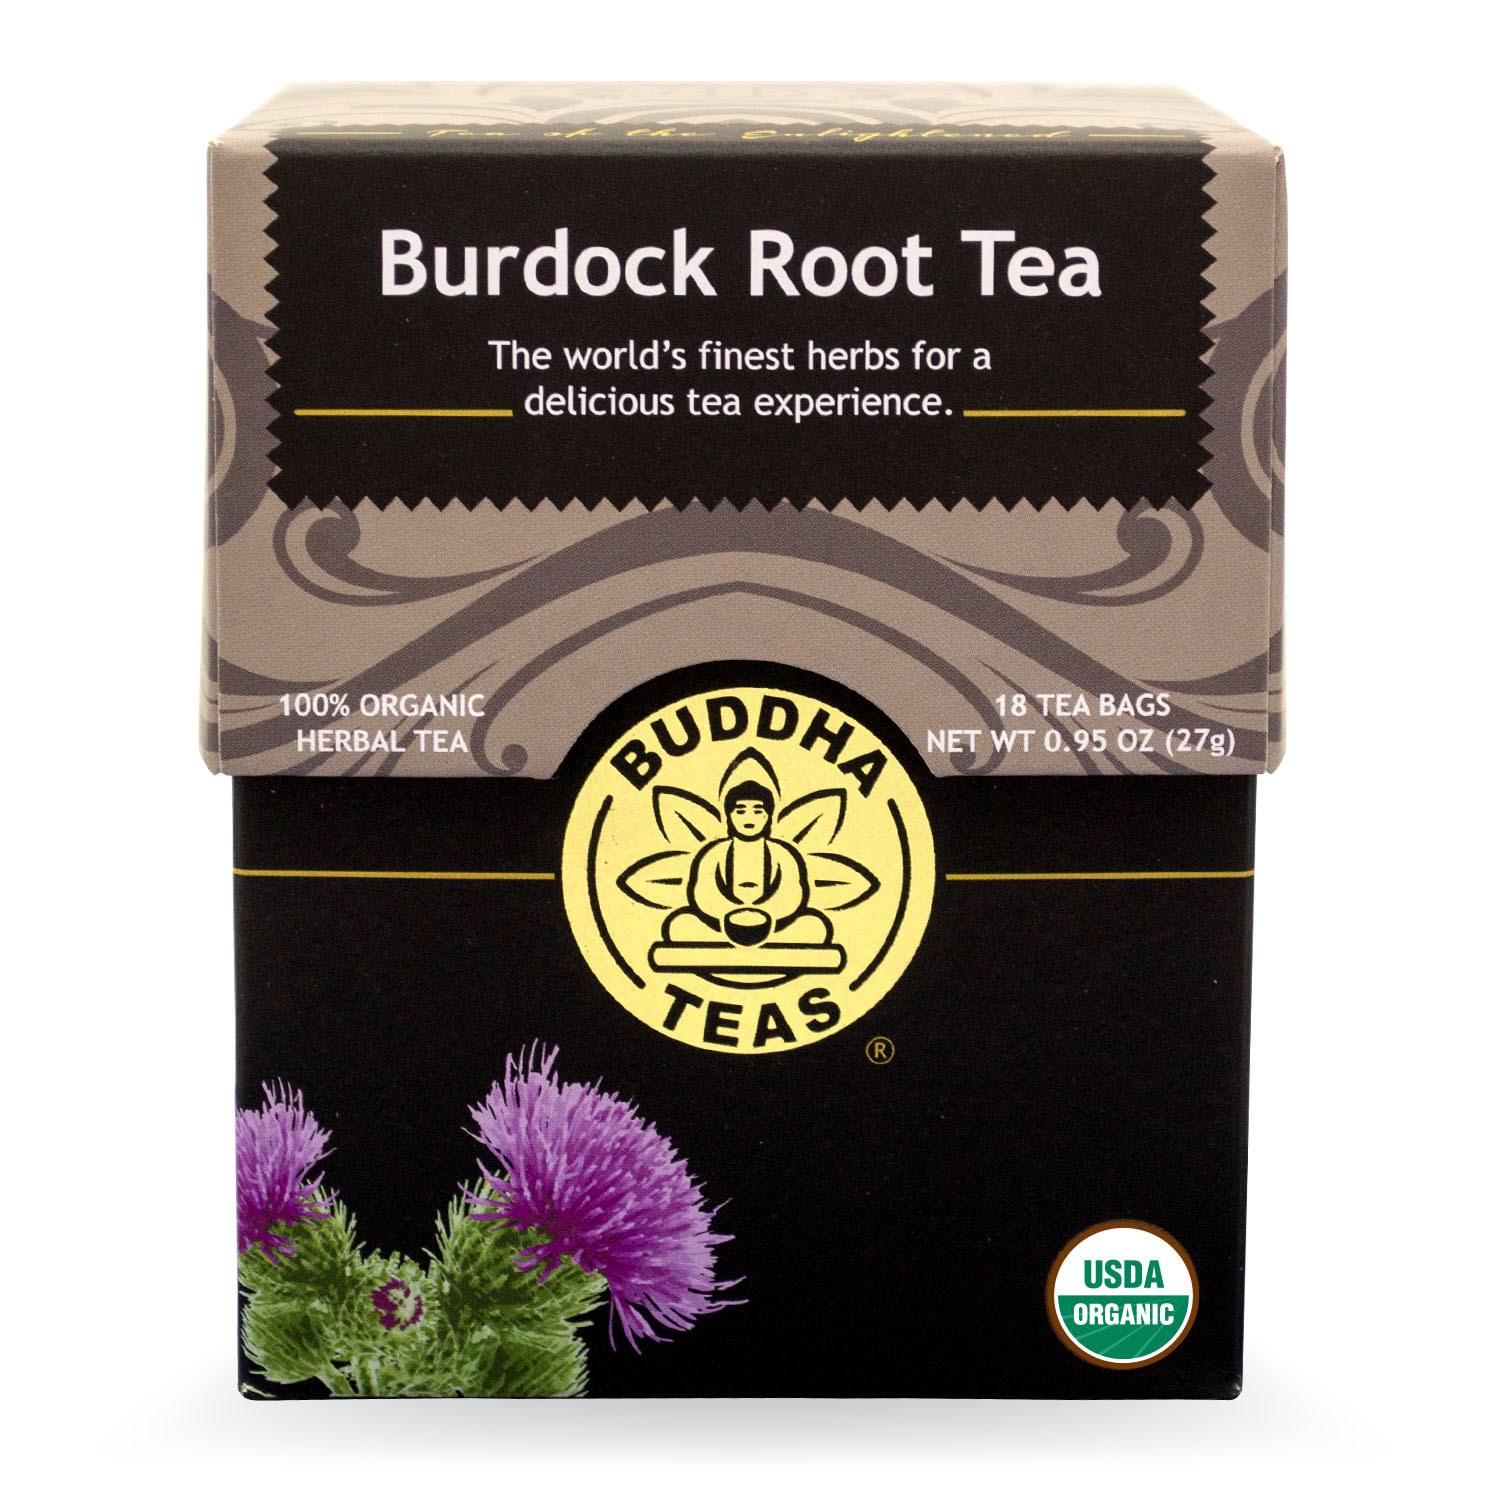 Buddha Teas Burdock Root Tea - 18 bags, 0.95 oz box